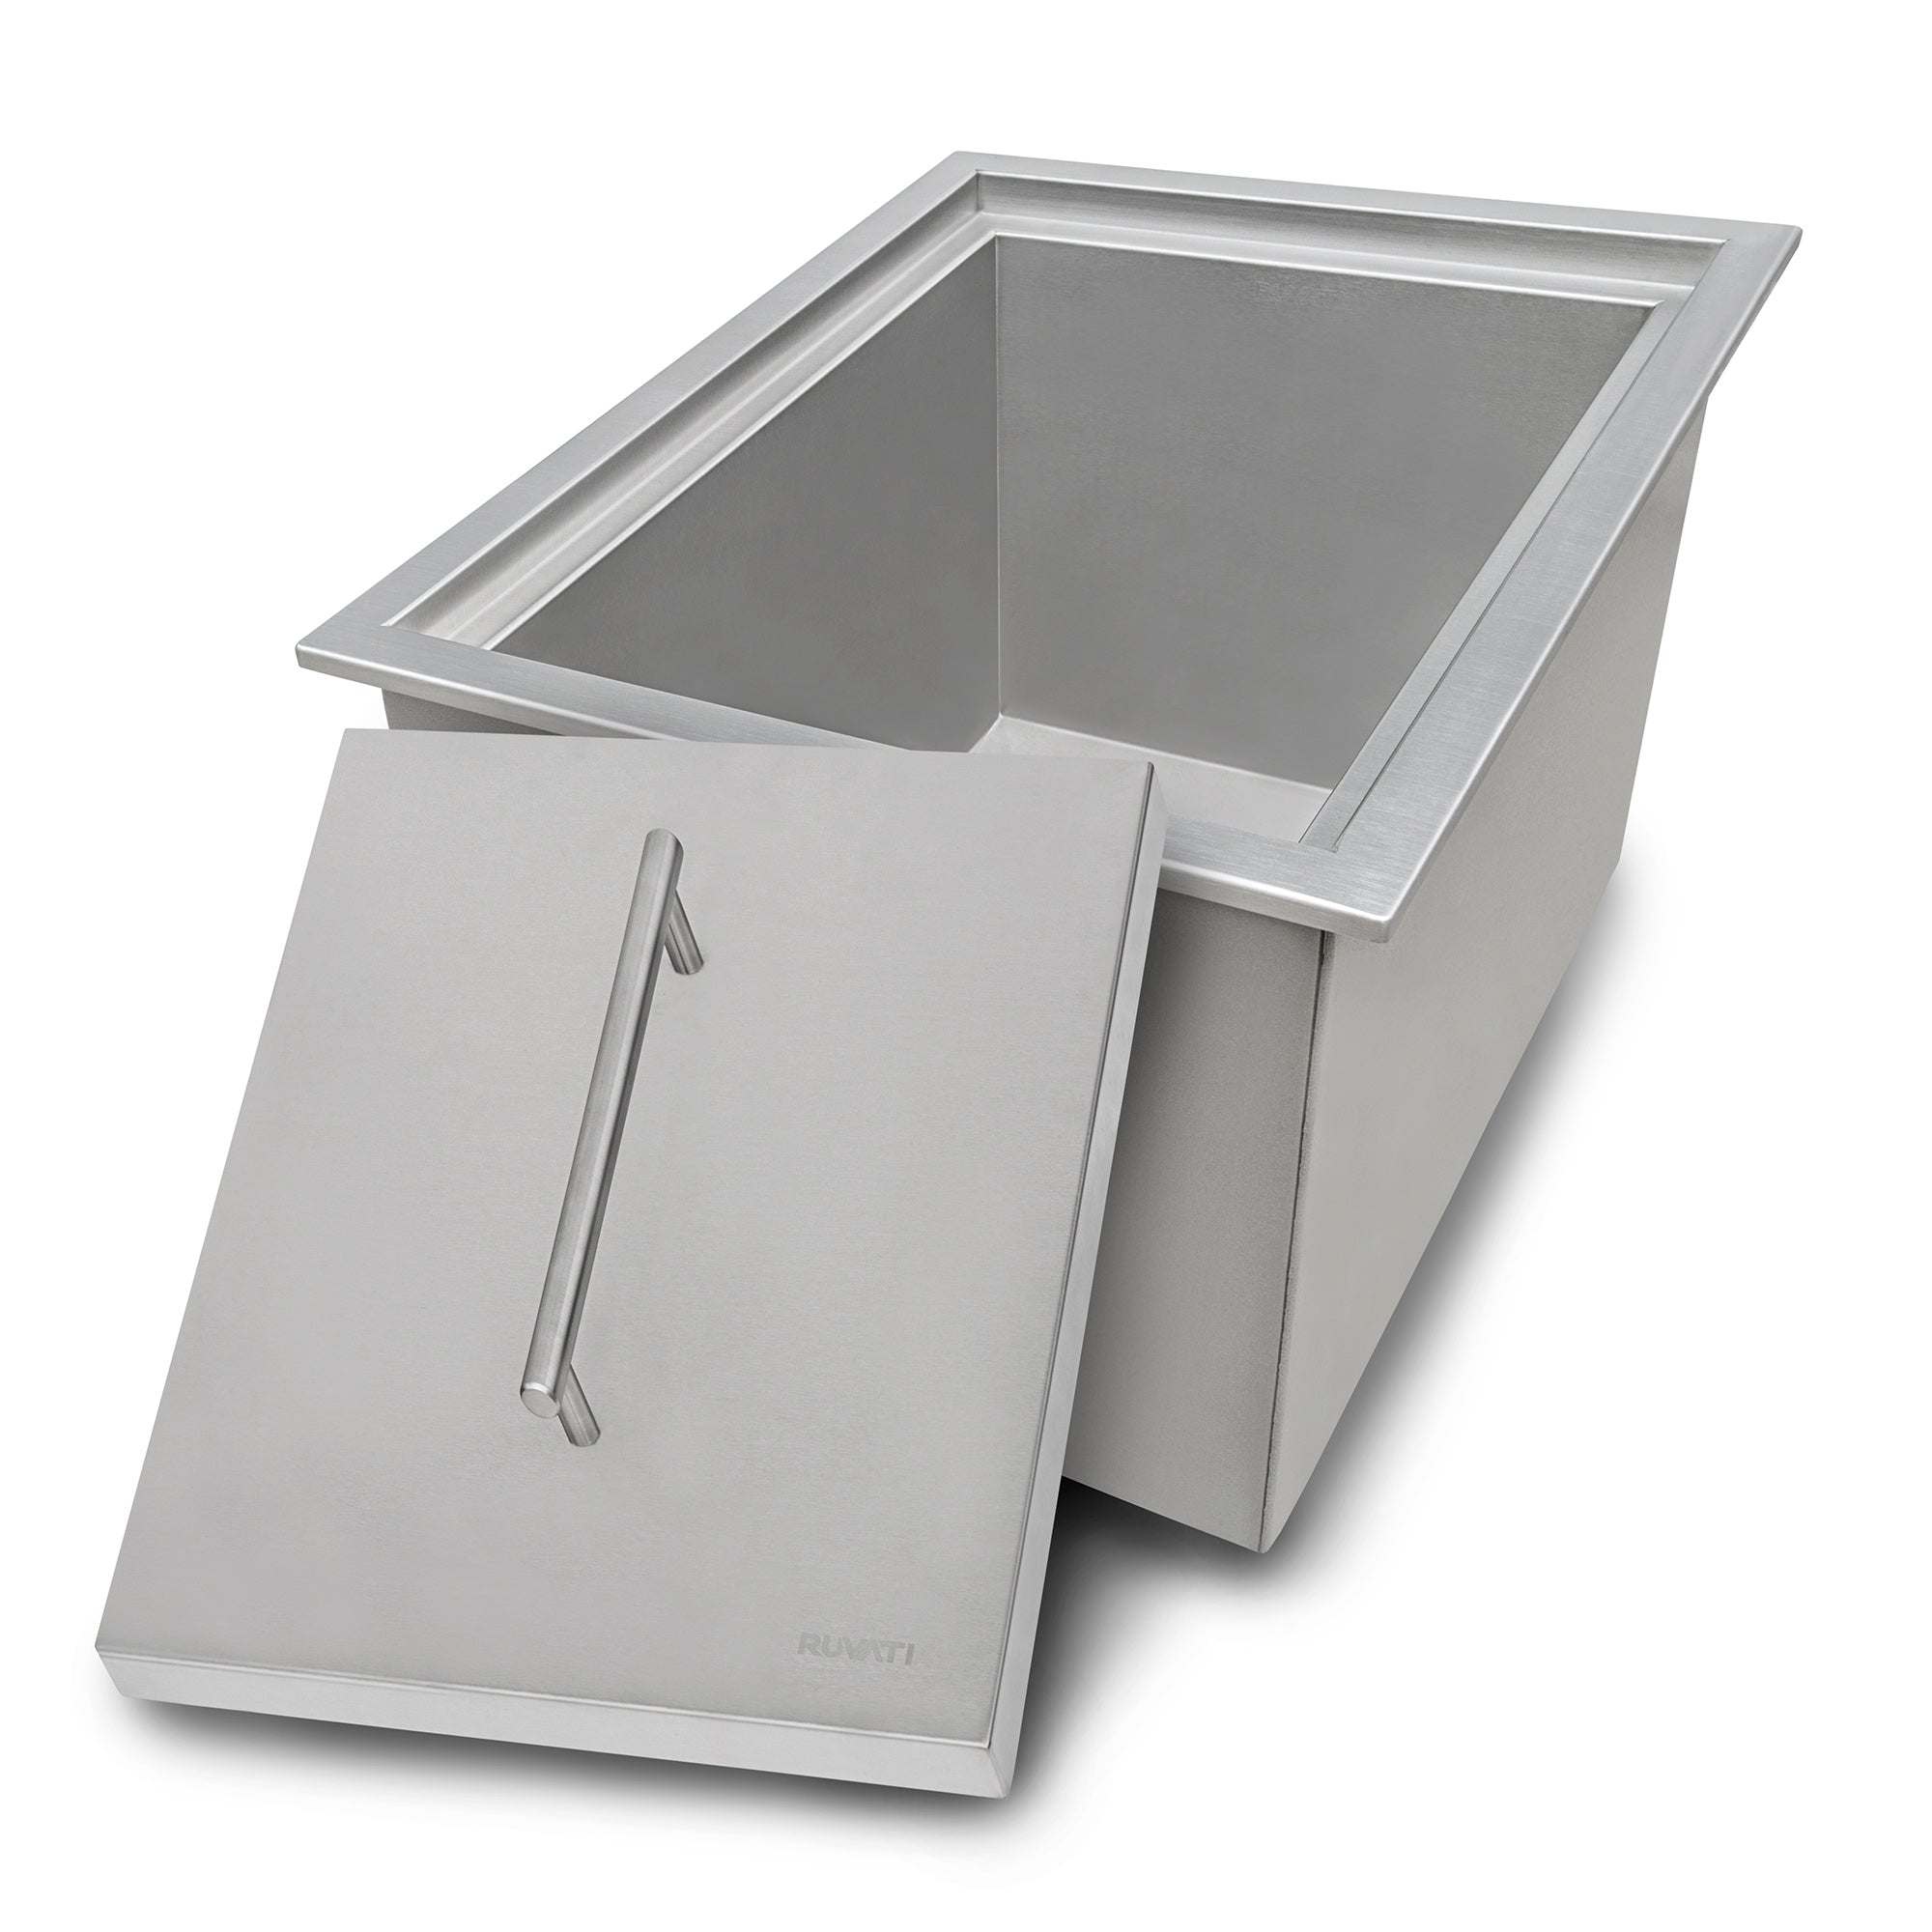 Ruvati 15" x 20" 16 Gauge Outdoor & Marine Insulated Ice Bucket Cooler Sink - RVQ6215